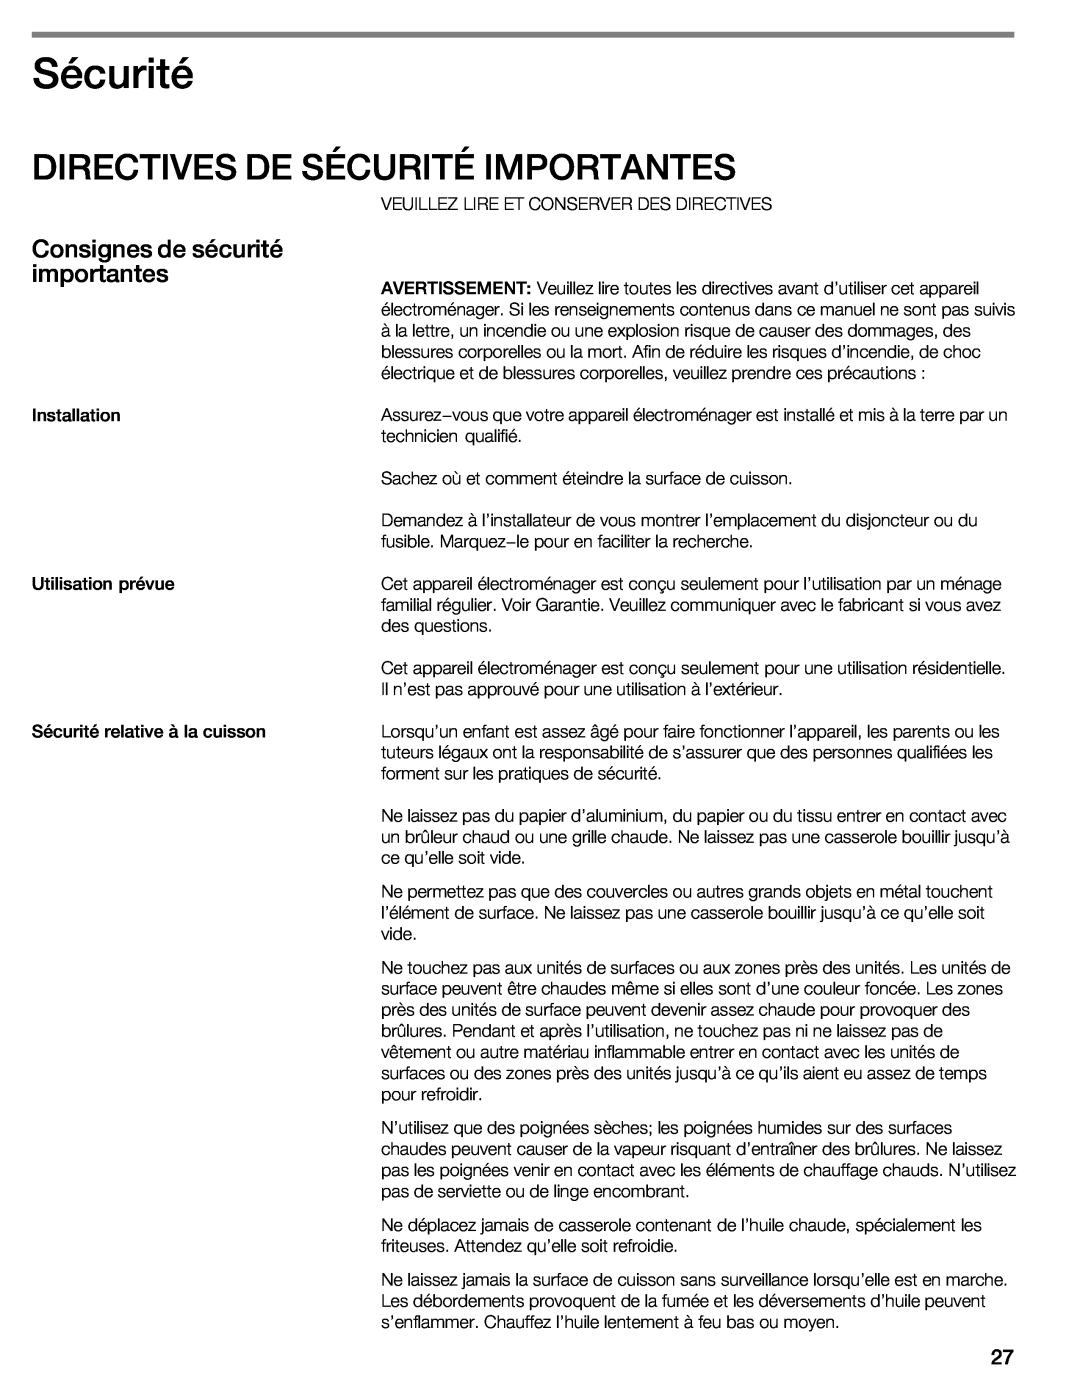 Thermador CIT304E manual Directives De Sécurité Importantes, Consignes de sécurité importantes 